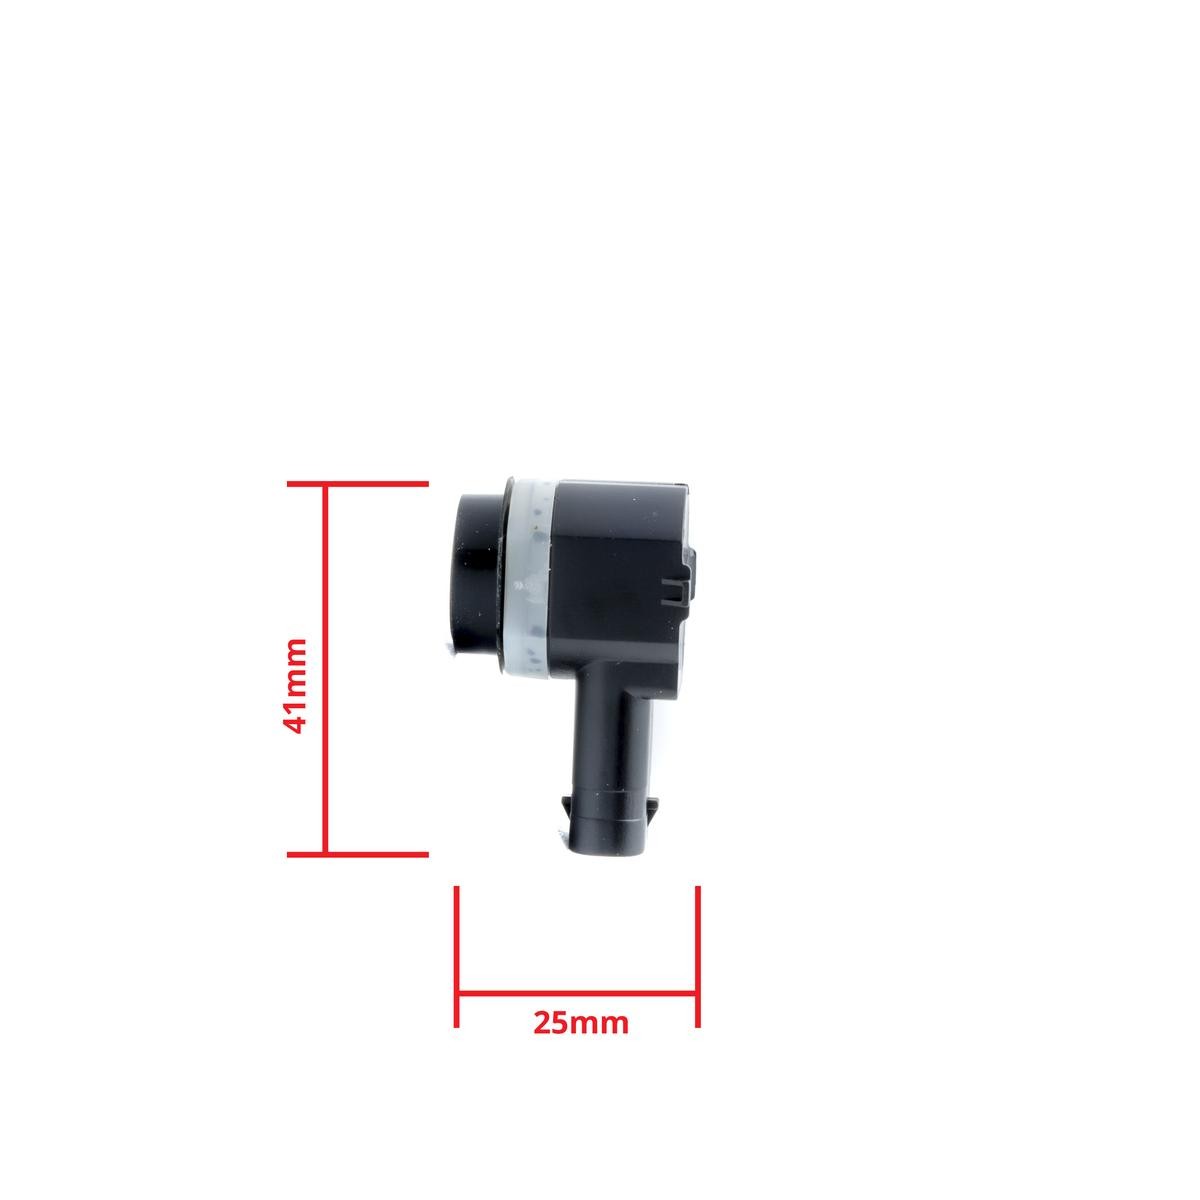 EPPDC51 Park distance control sensors EPPDC51 EINPARTS Front, Rear, black, Ultrasonic Sensor